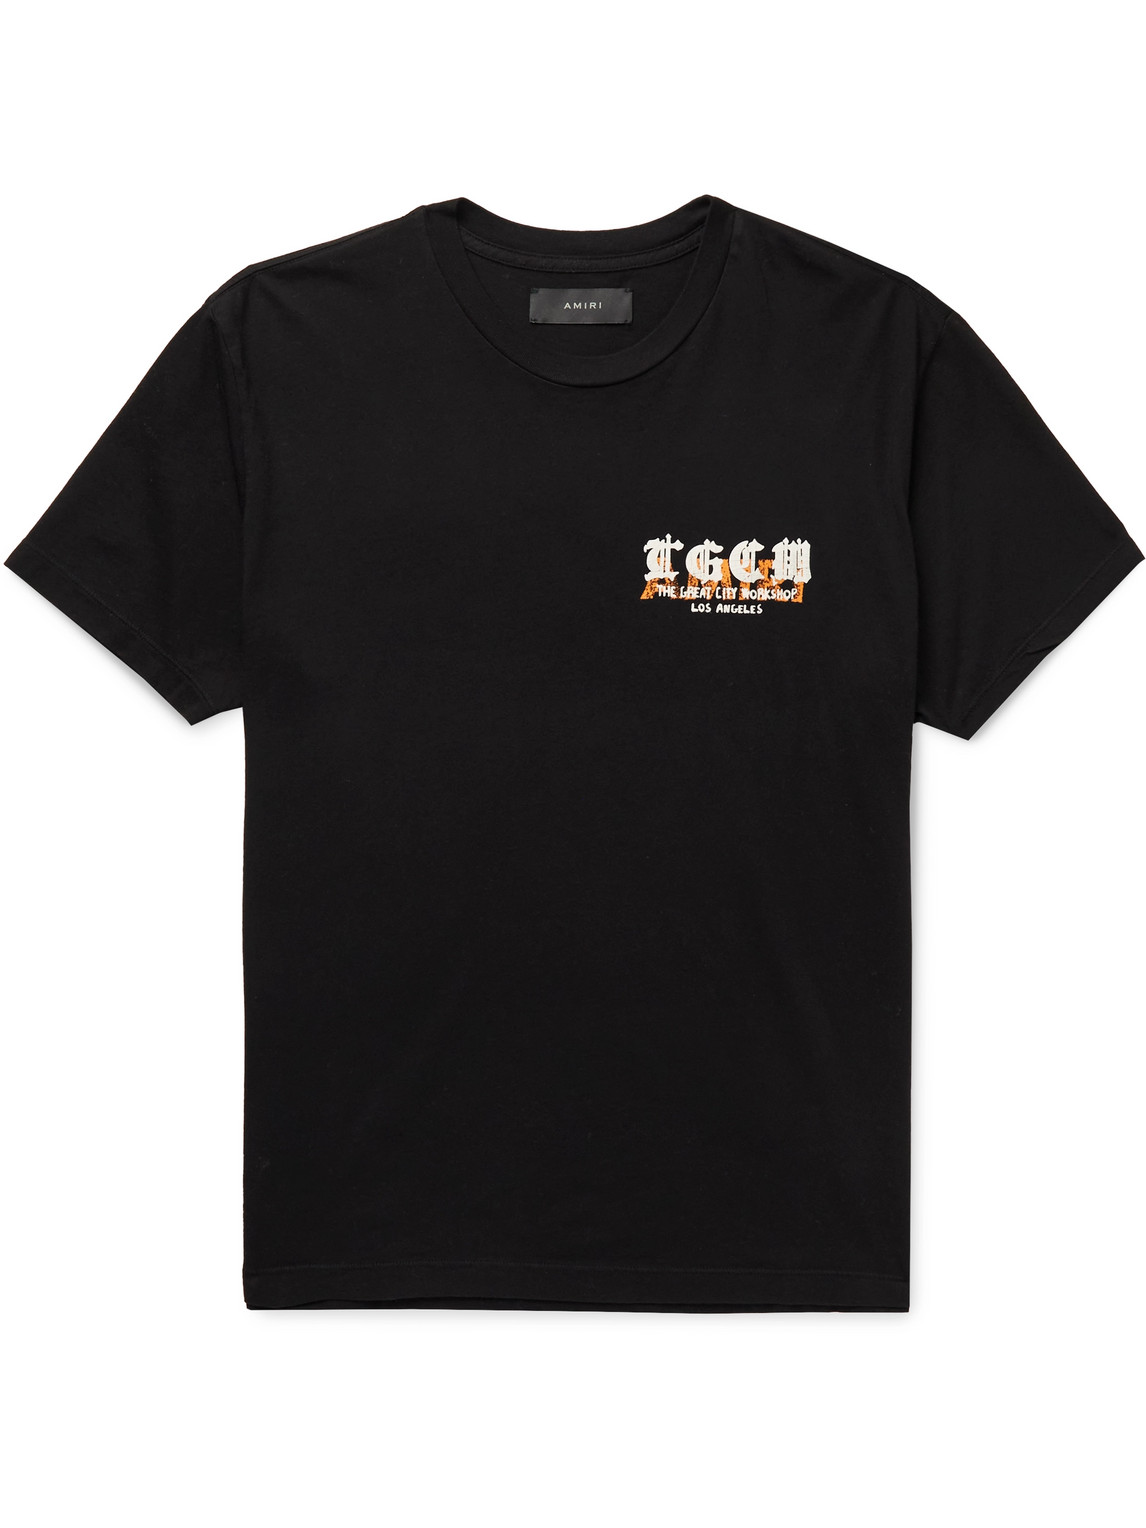 TGCW Printed Cotton-Jersey T-Shirt